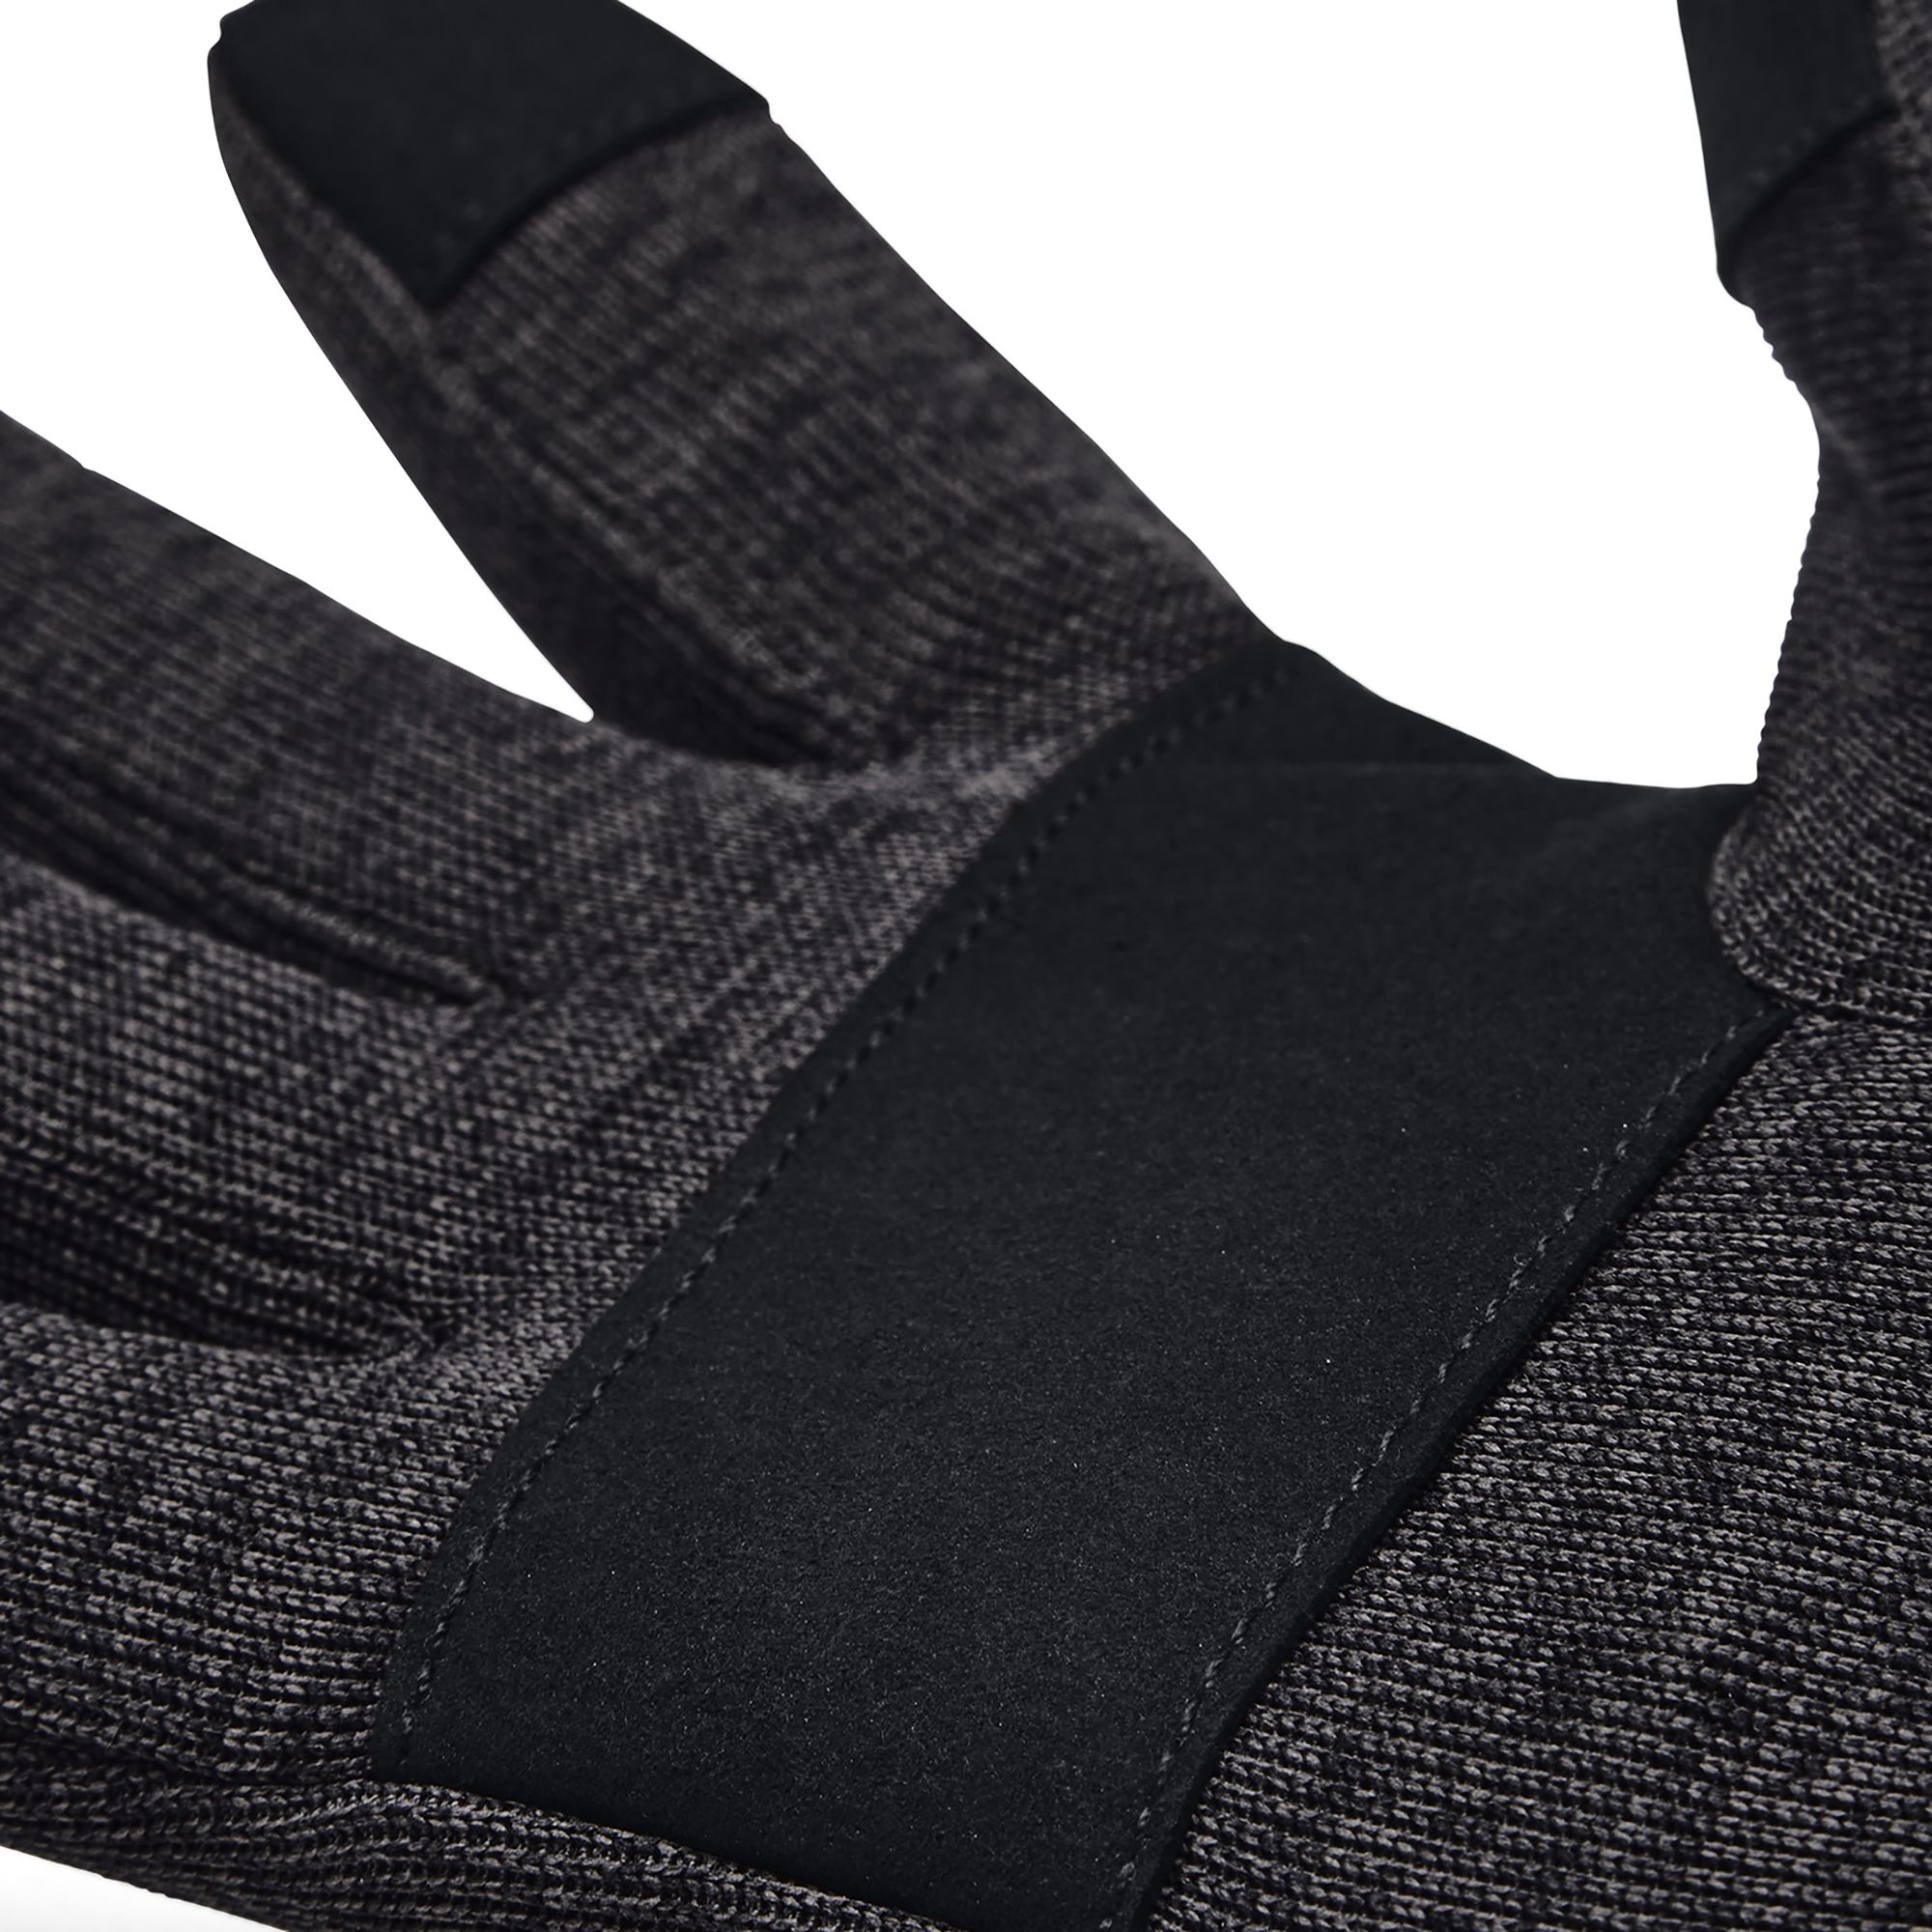 Under Armour Men's Storm Fleece Gloves